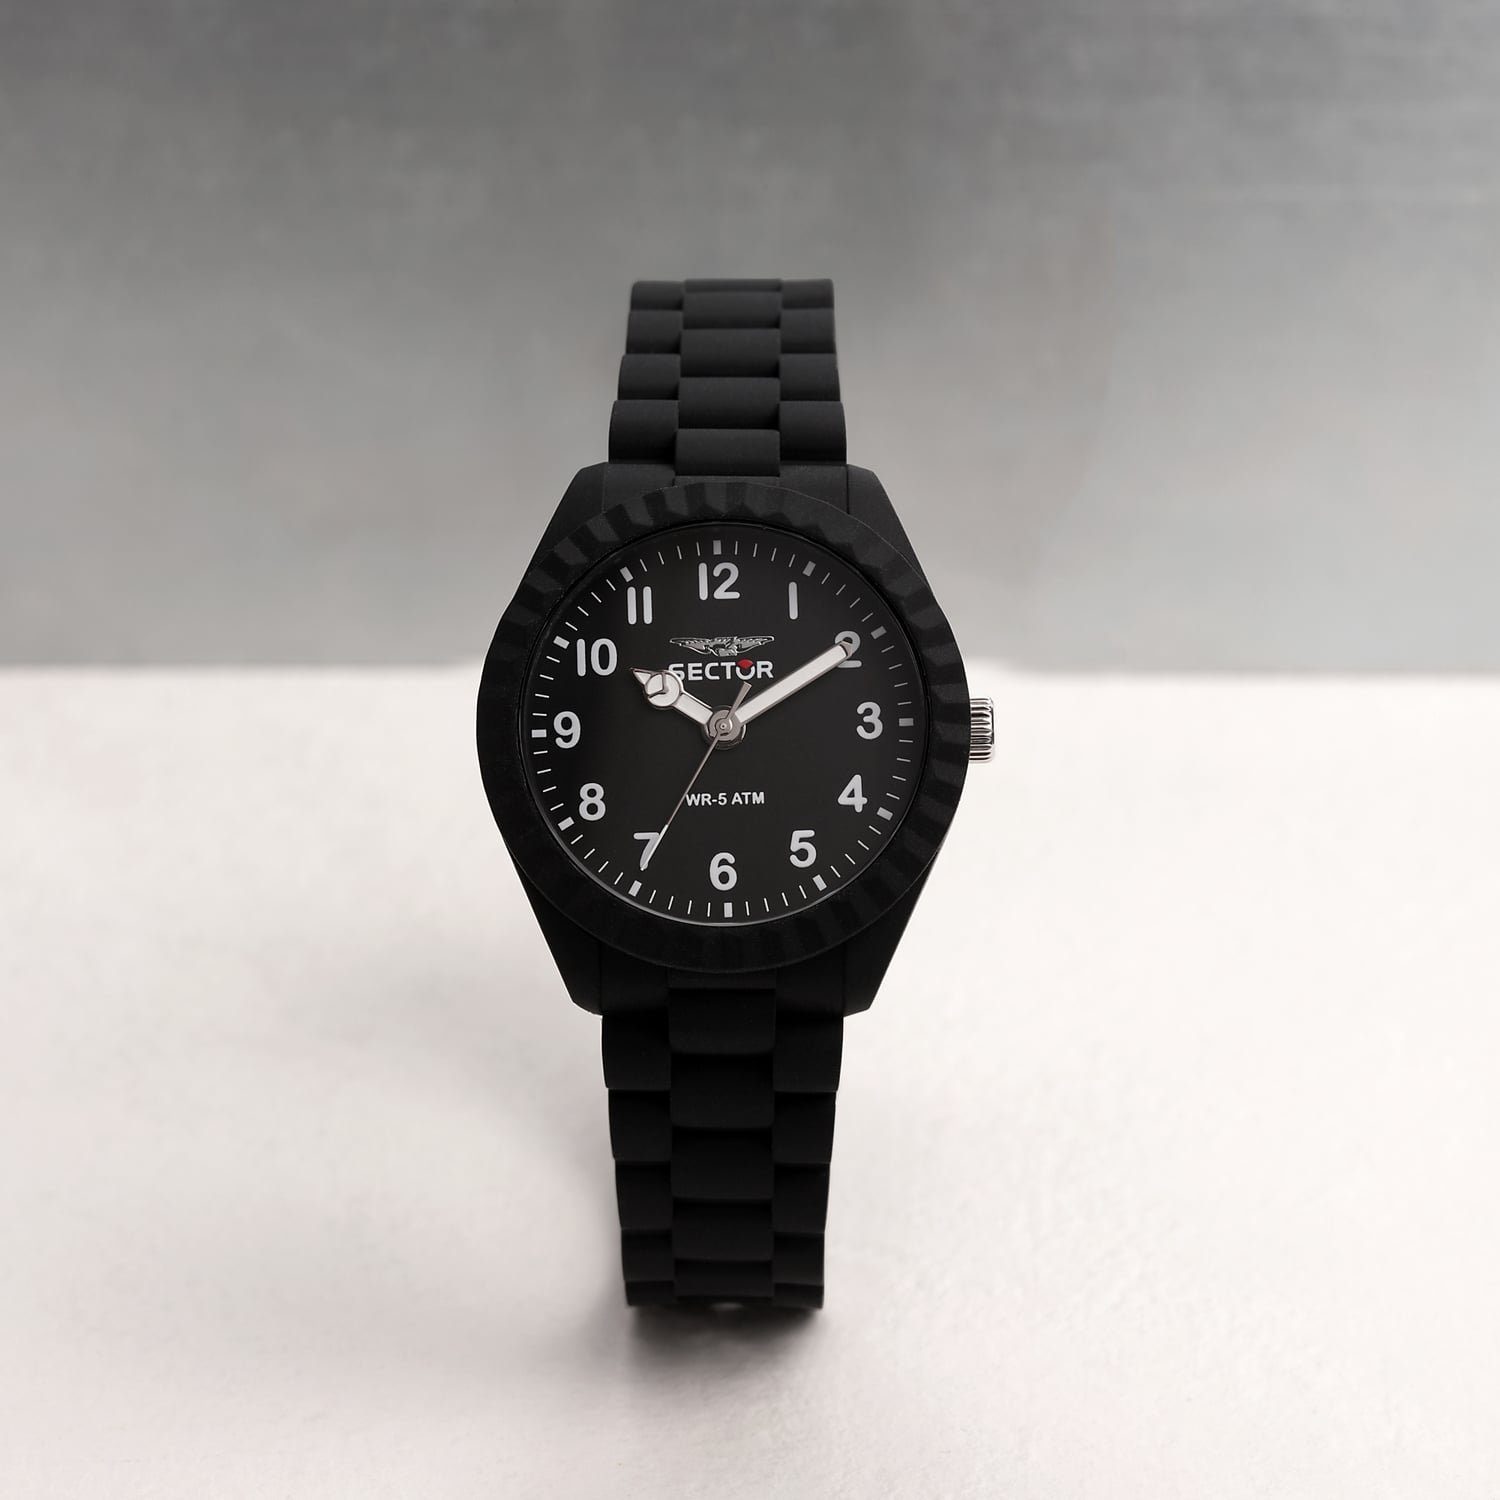 Sector schwarz, Sector Armbanduhr groß Quarzuhr Armbanduhr Herren (44mm), Analog, Fashion rund, Herren Silikonarmband